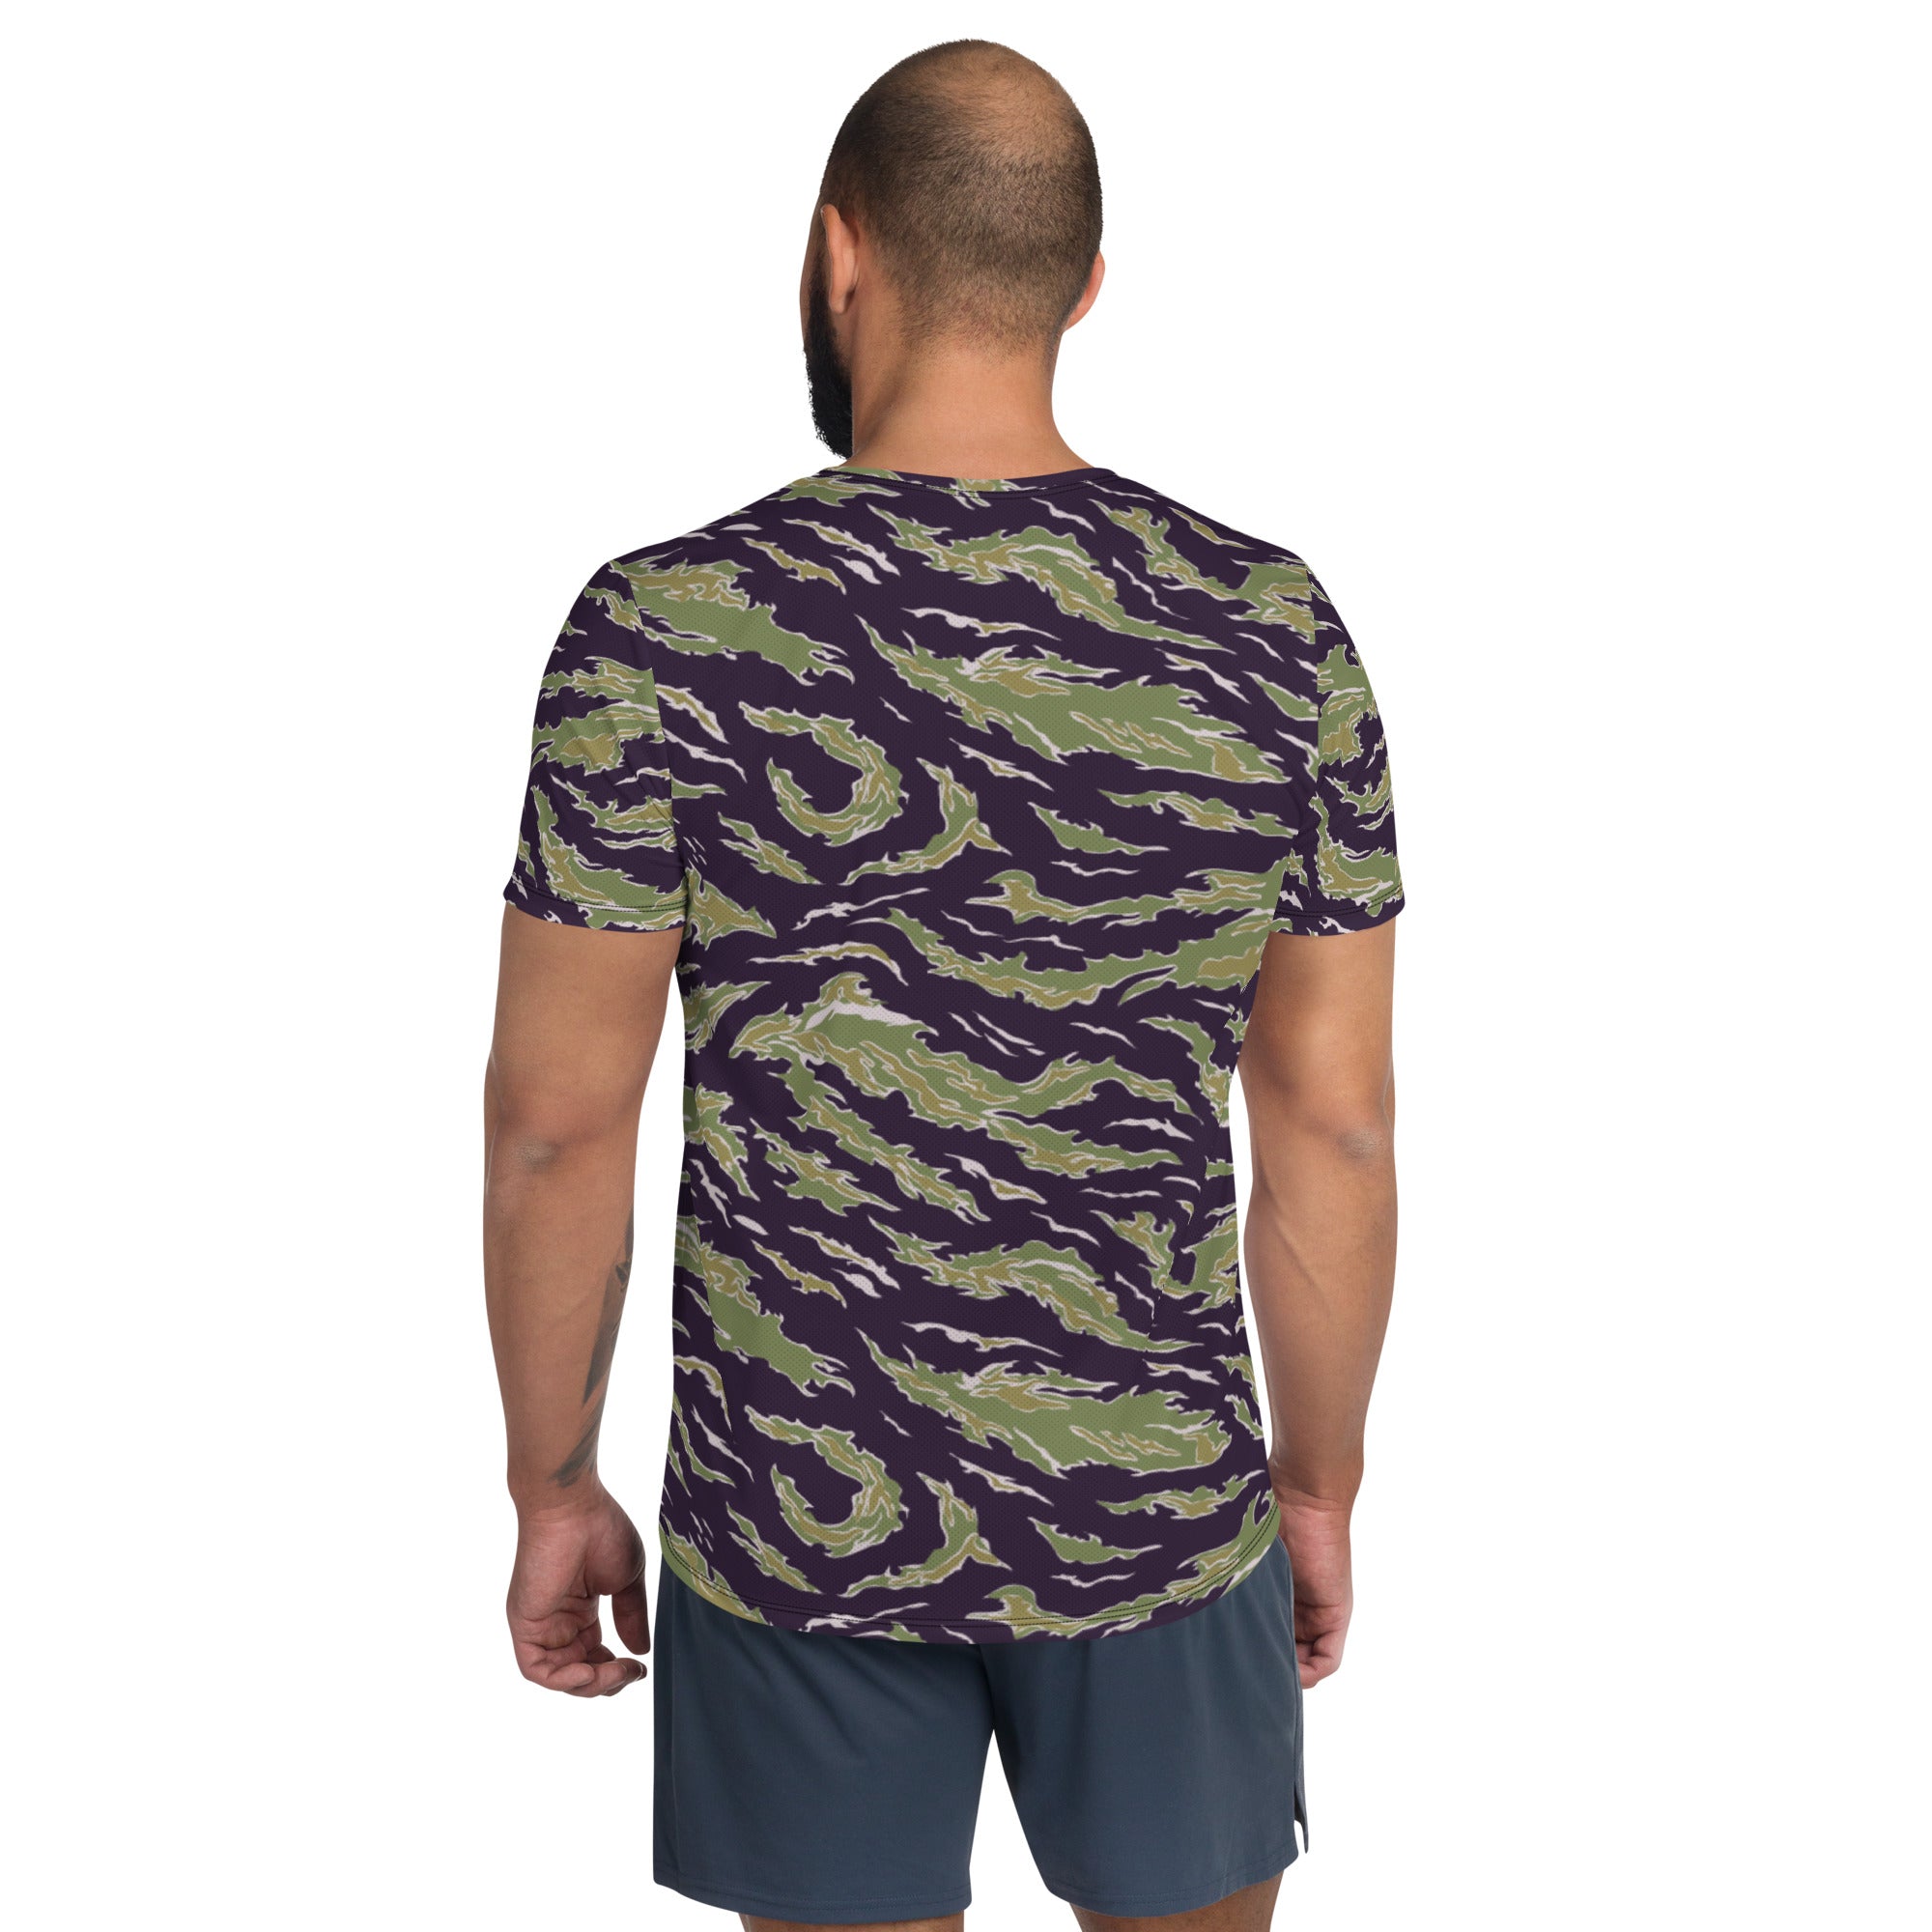 Aloha Camo Men's Athletic T-shirt - Liberty Maniacs